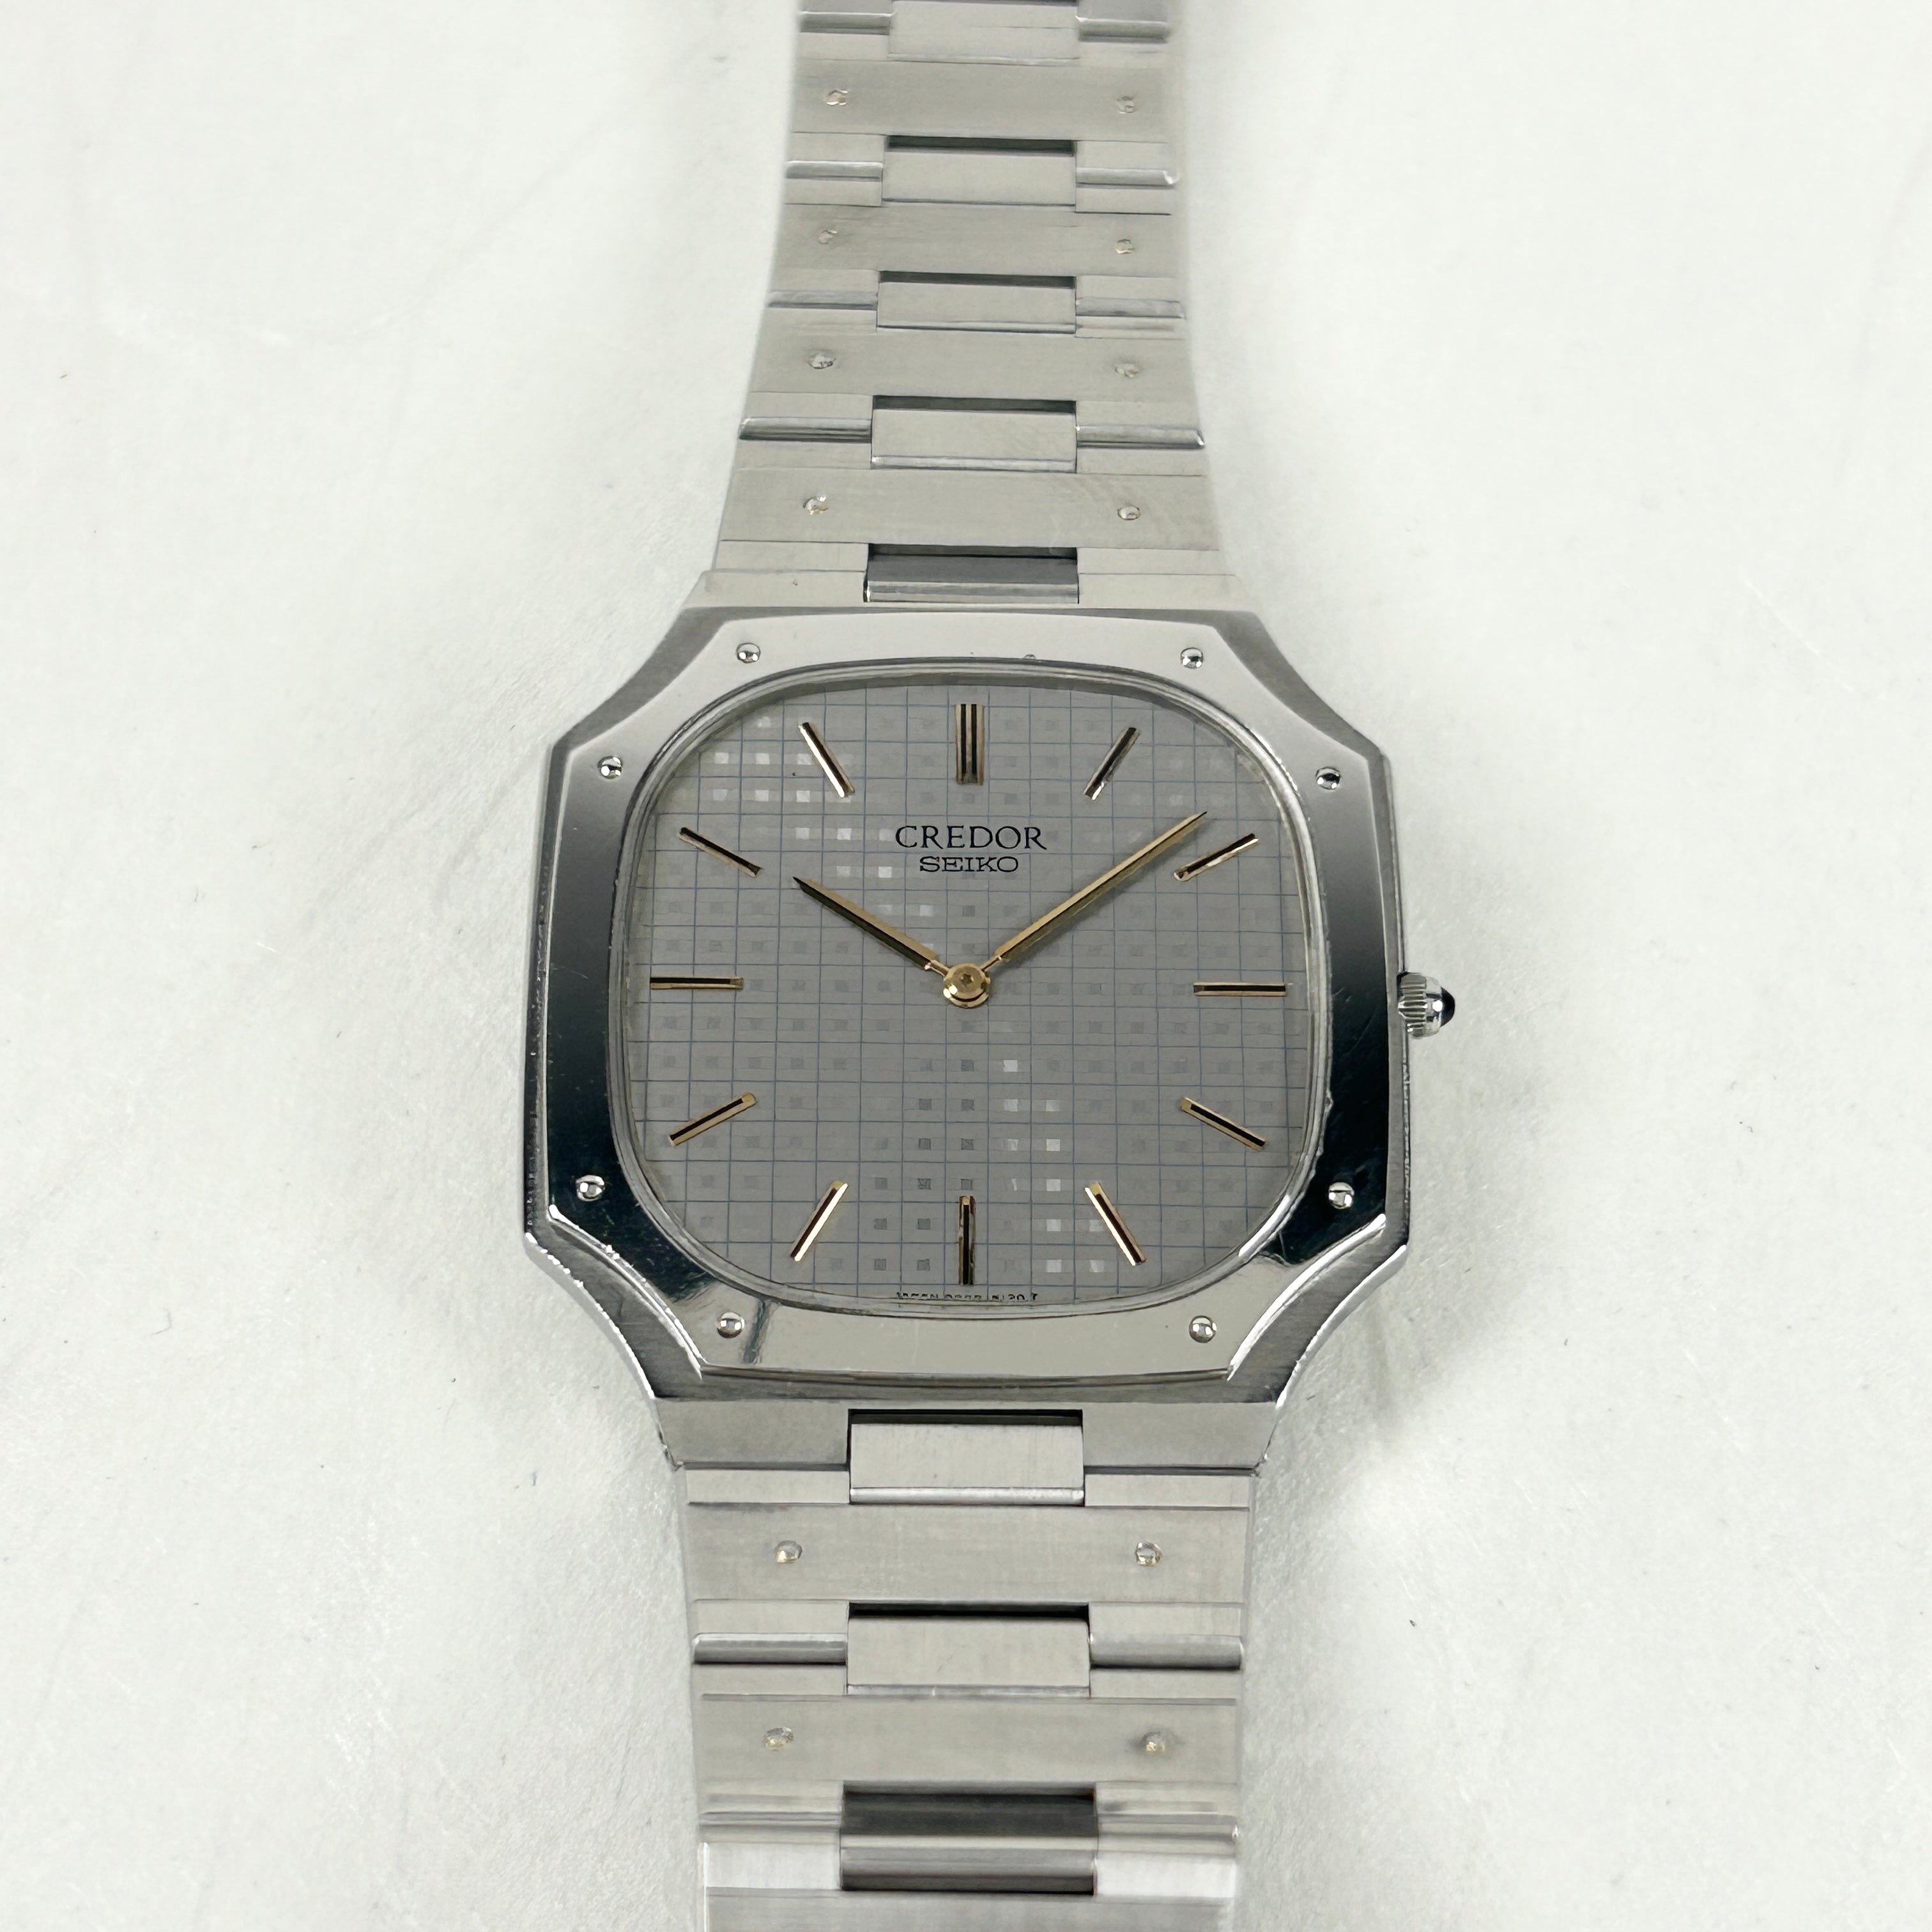 SEIKO】クレドールSS 9300-5070 – REGALO vintage watch